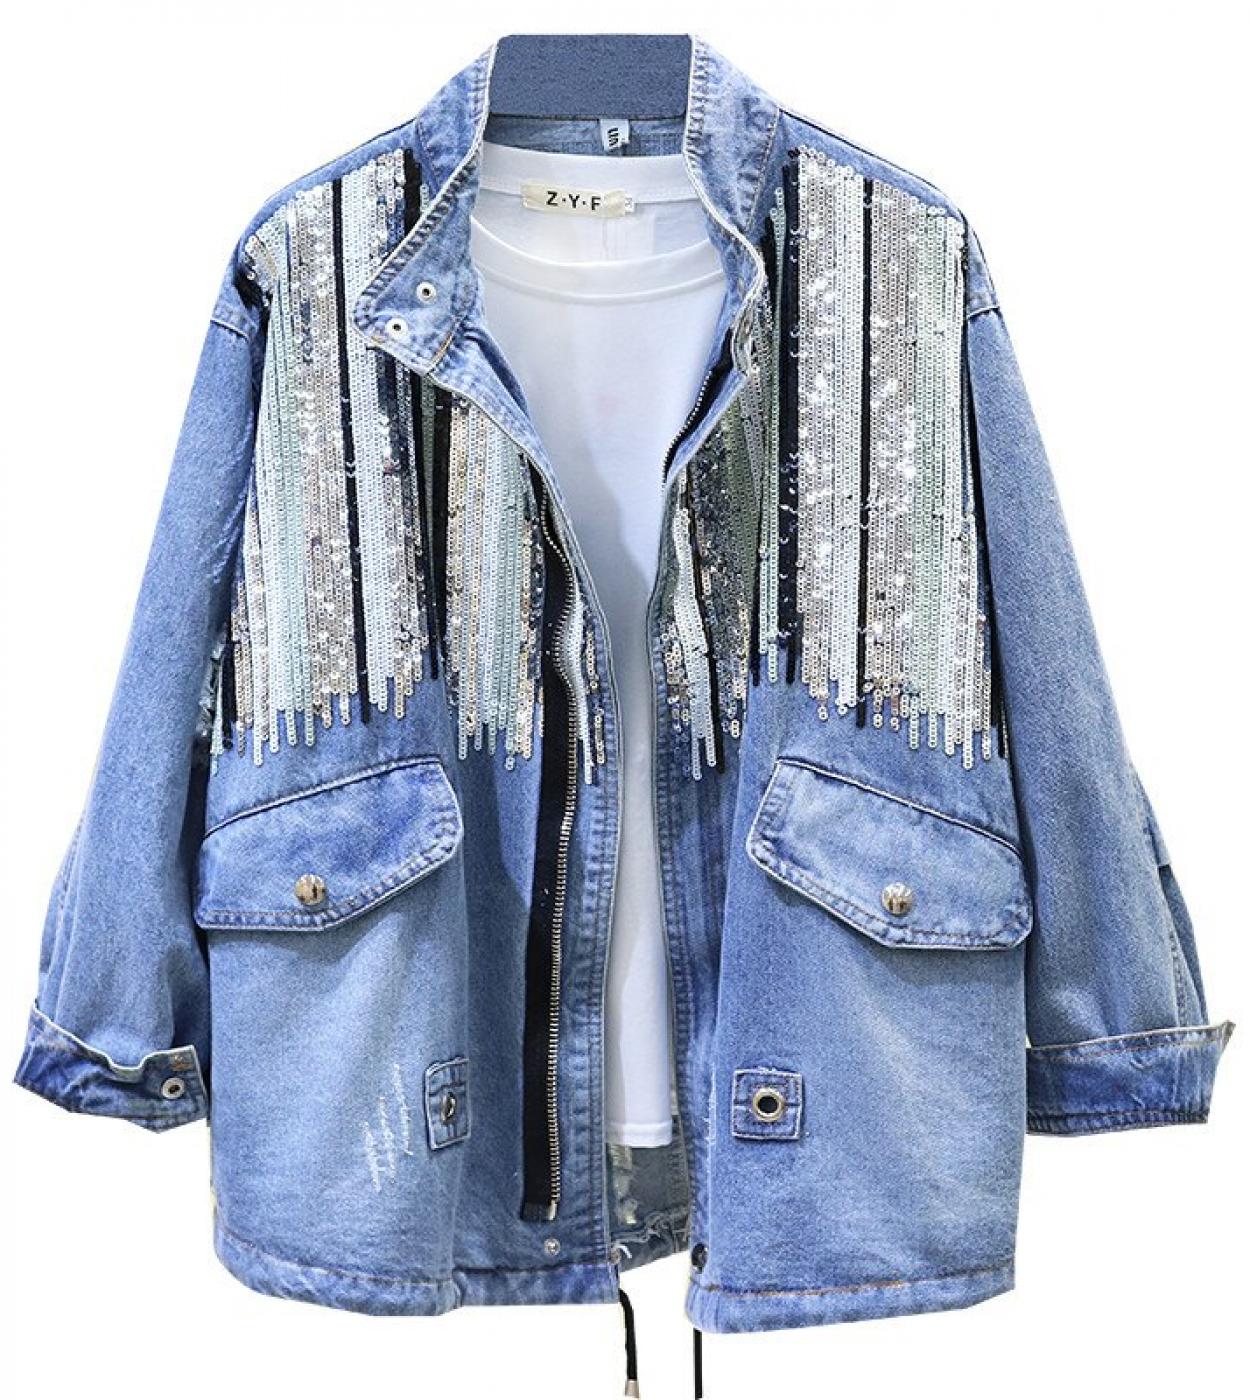  New Sequins Denim Jacket Women Bomber Jacket Fashion Long Sleeves Coats Vintage Hippie Jeans Jacket Colete Feminino P35